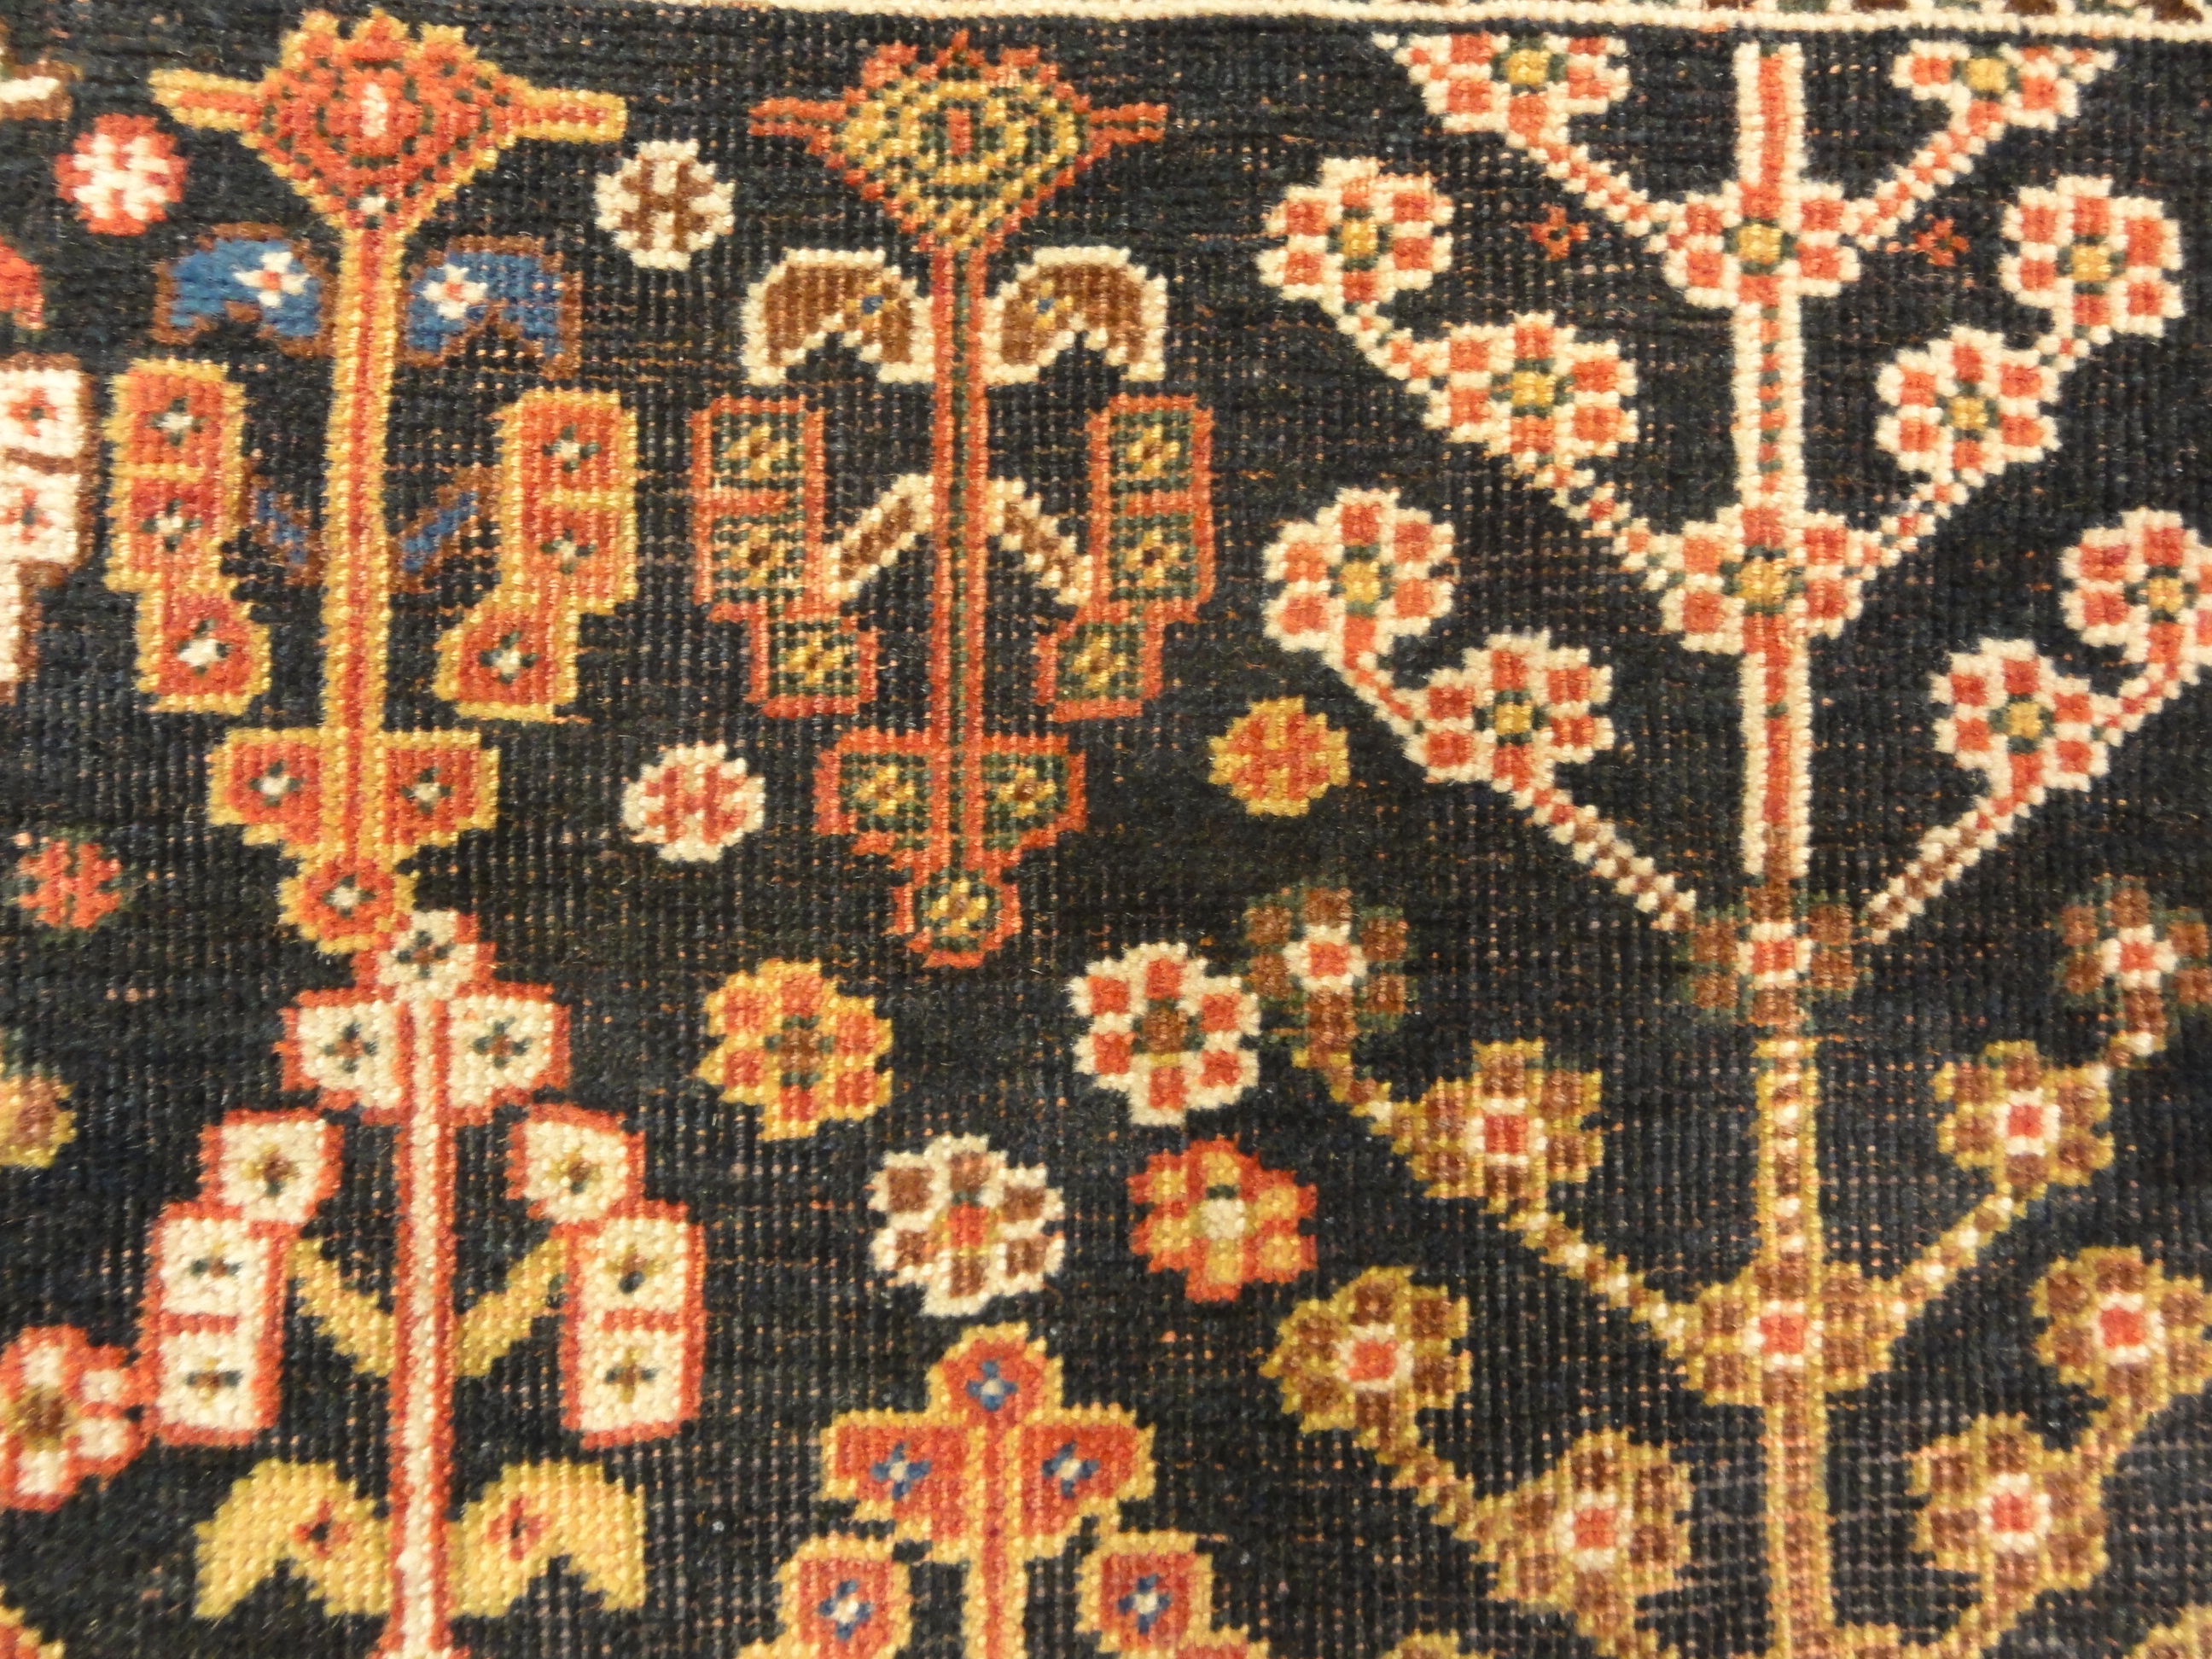 Antique Persian Qashqai 19th Century Rug Genuine Authentic Intricate Woven Carpet Art Santa Barbara Design Center Rugs and More